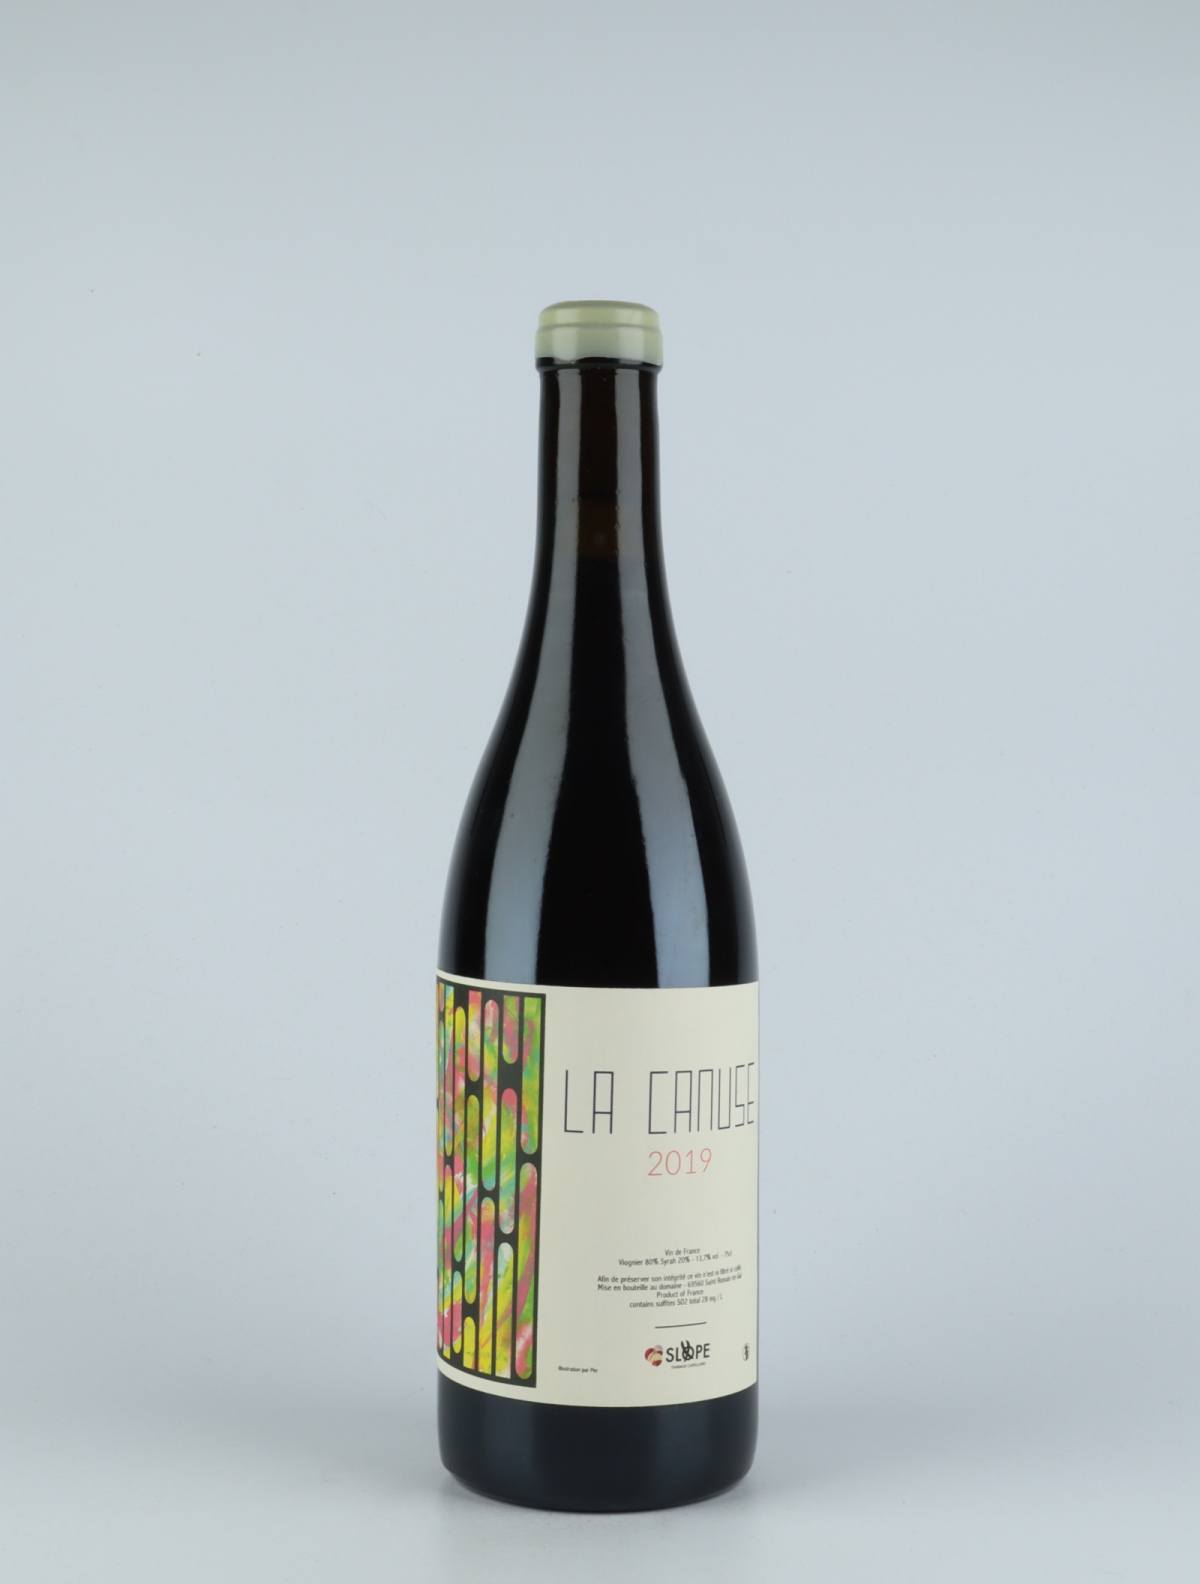 A bottle 2019 La Canuse Red wine from Slope, Rhône in France